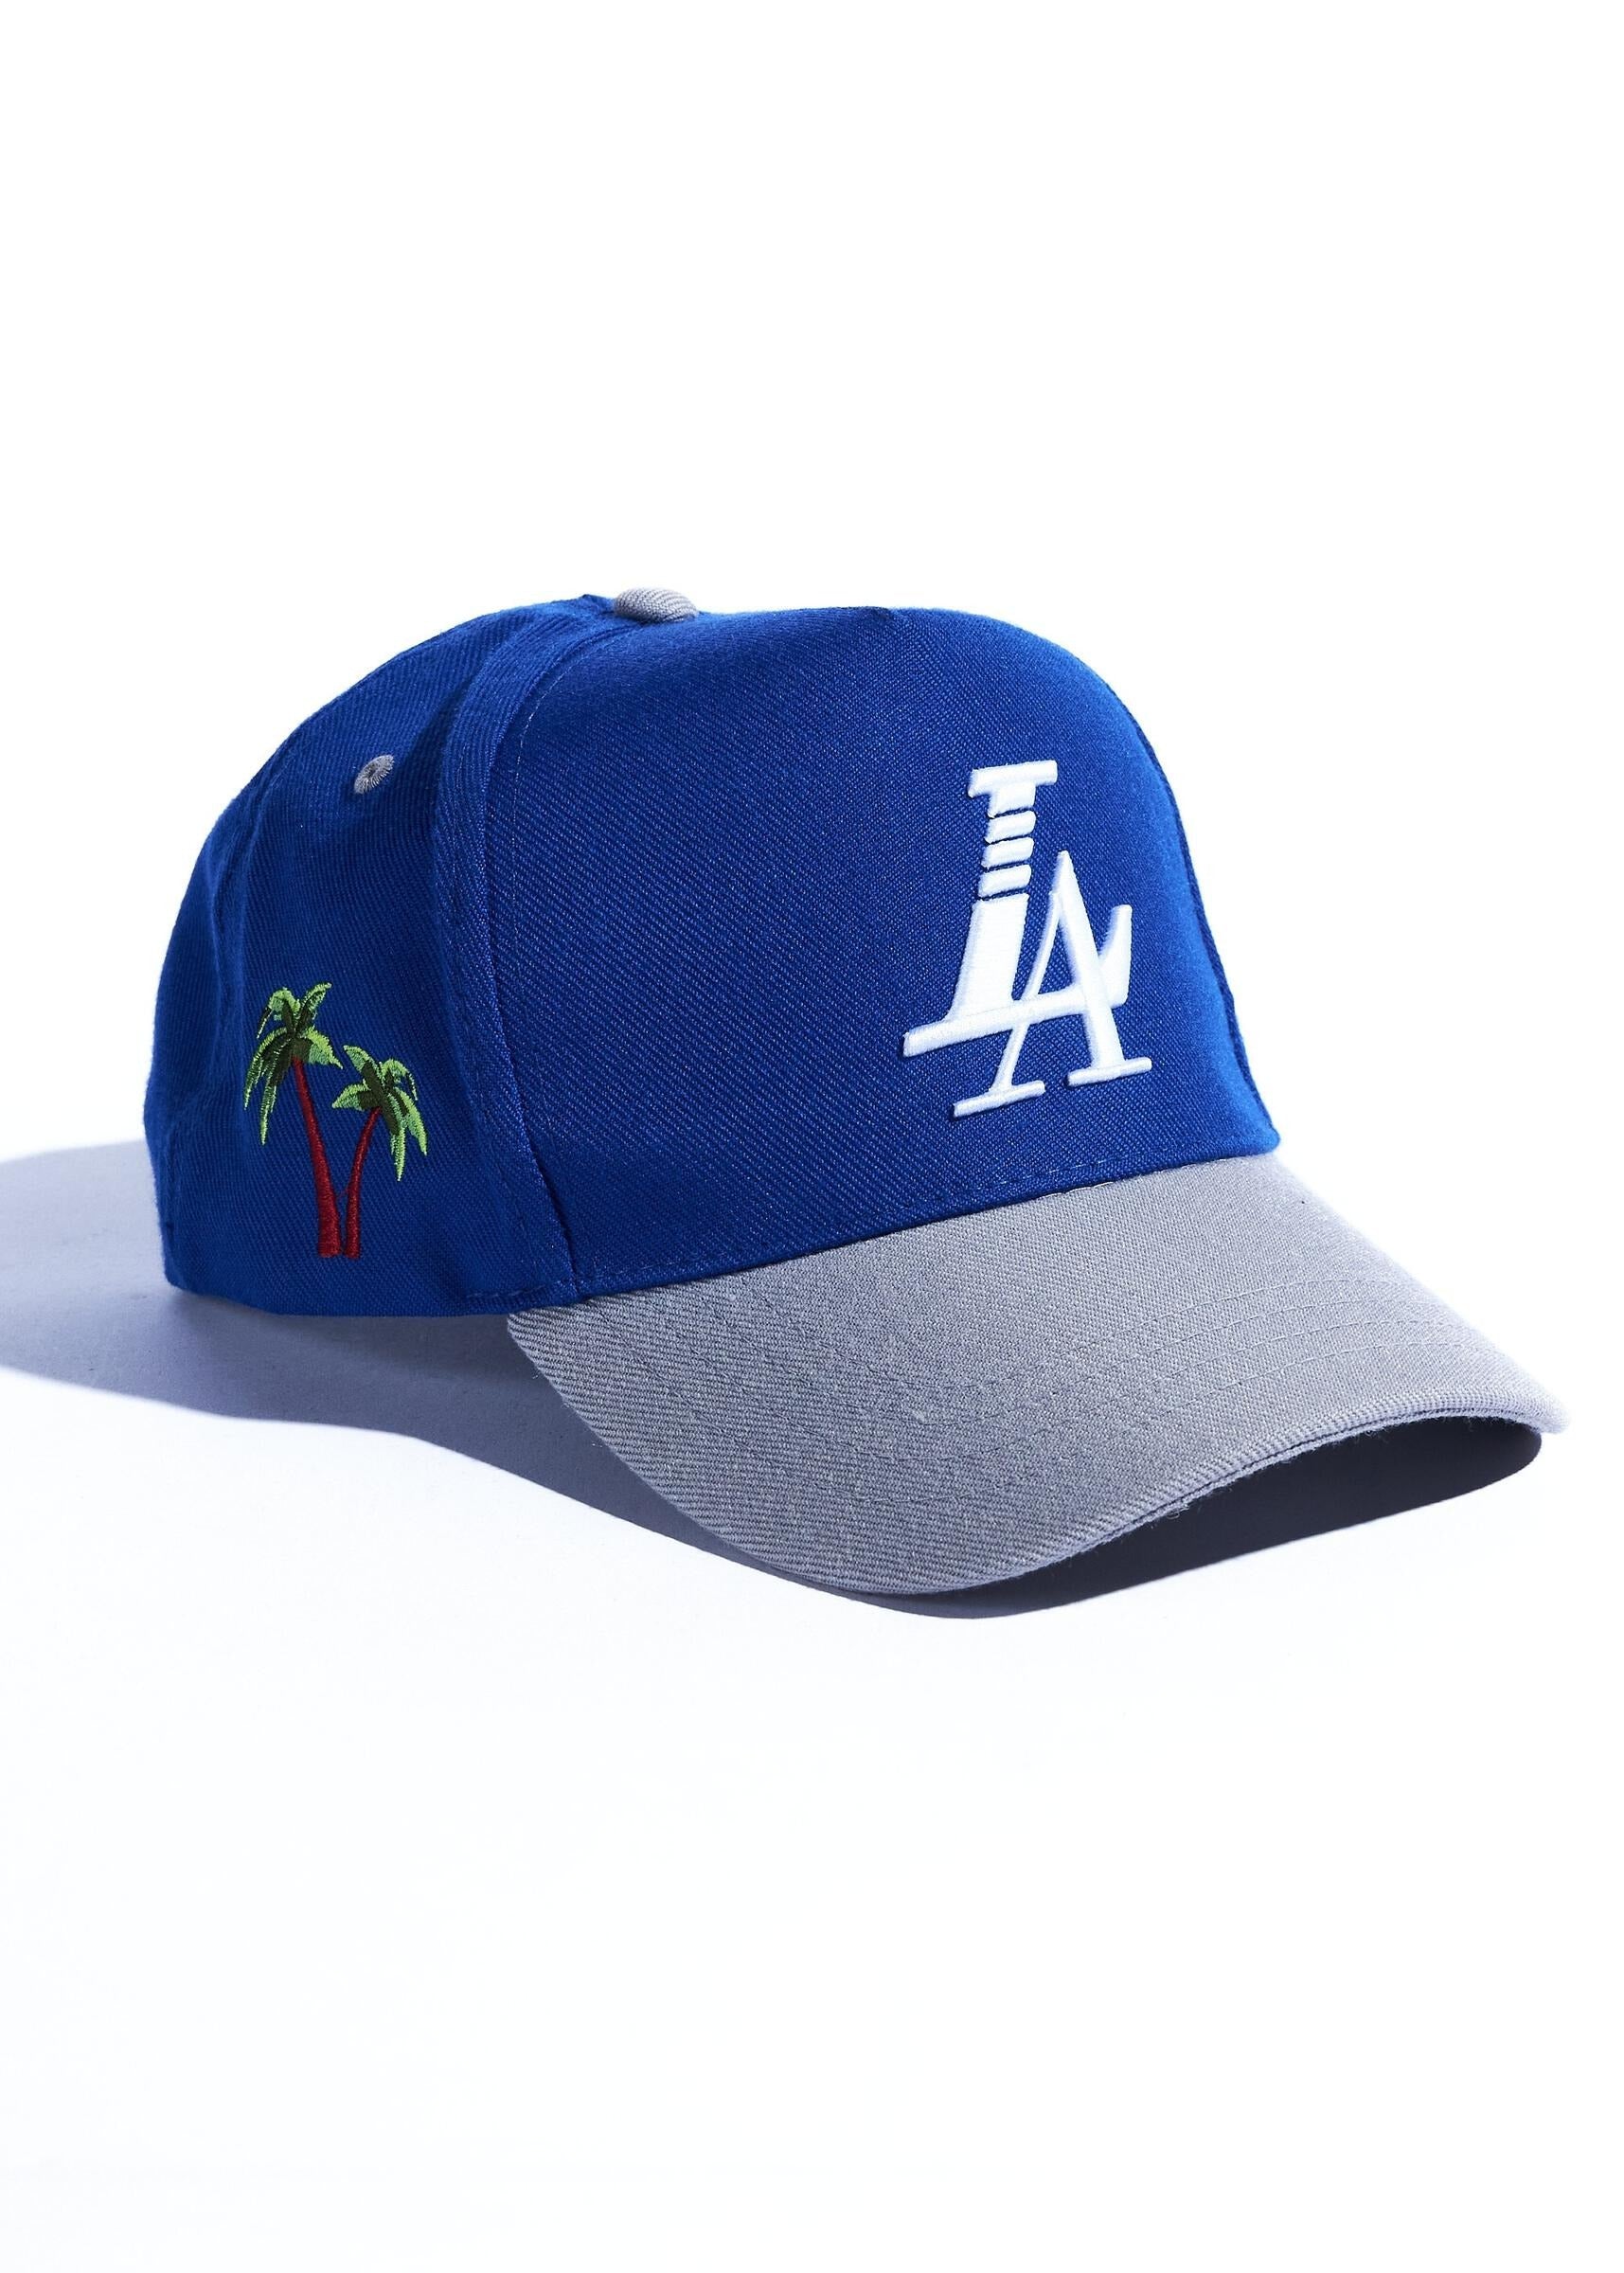 Lake Arrowhead Signature LA Trucker Hat with Arrowhead, Hats and Beanies